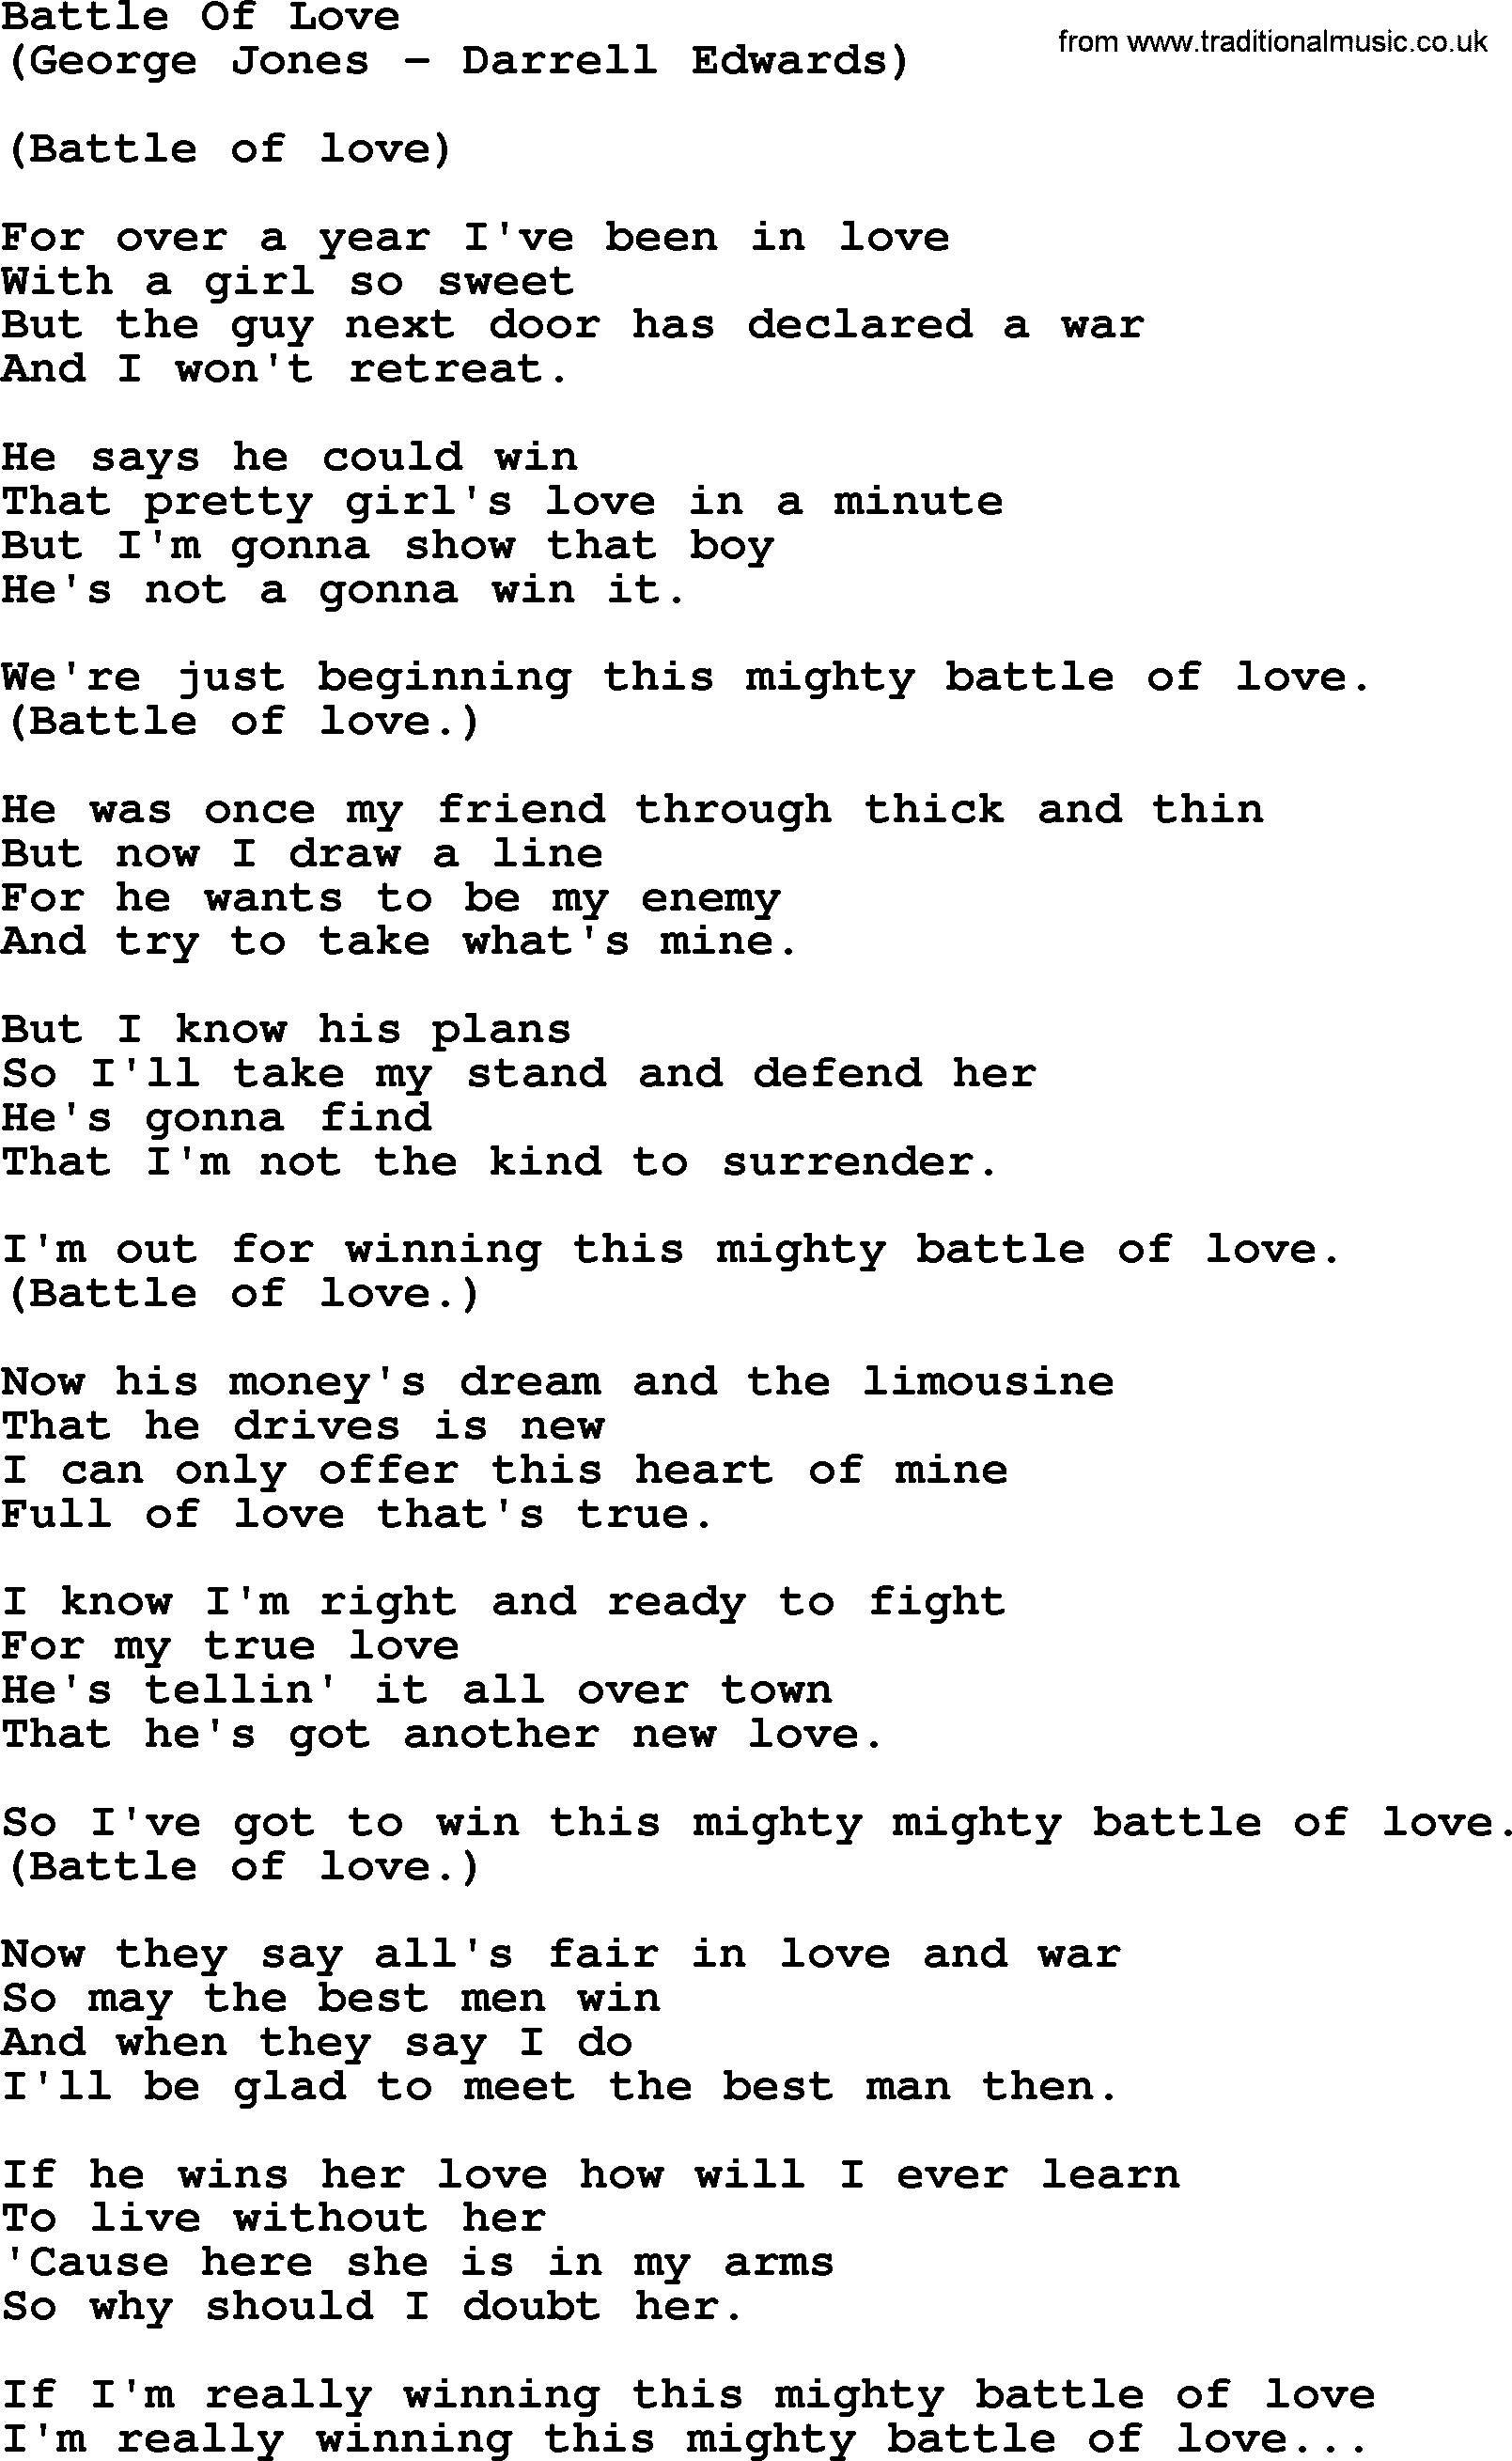 George Jones song: Battle Of Love, lyrics